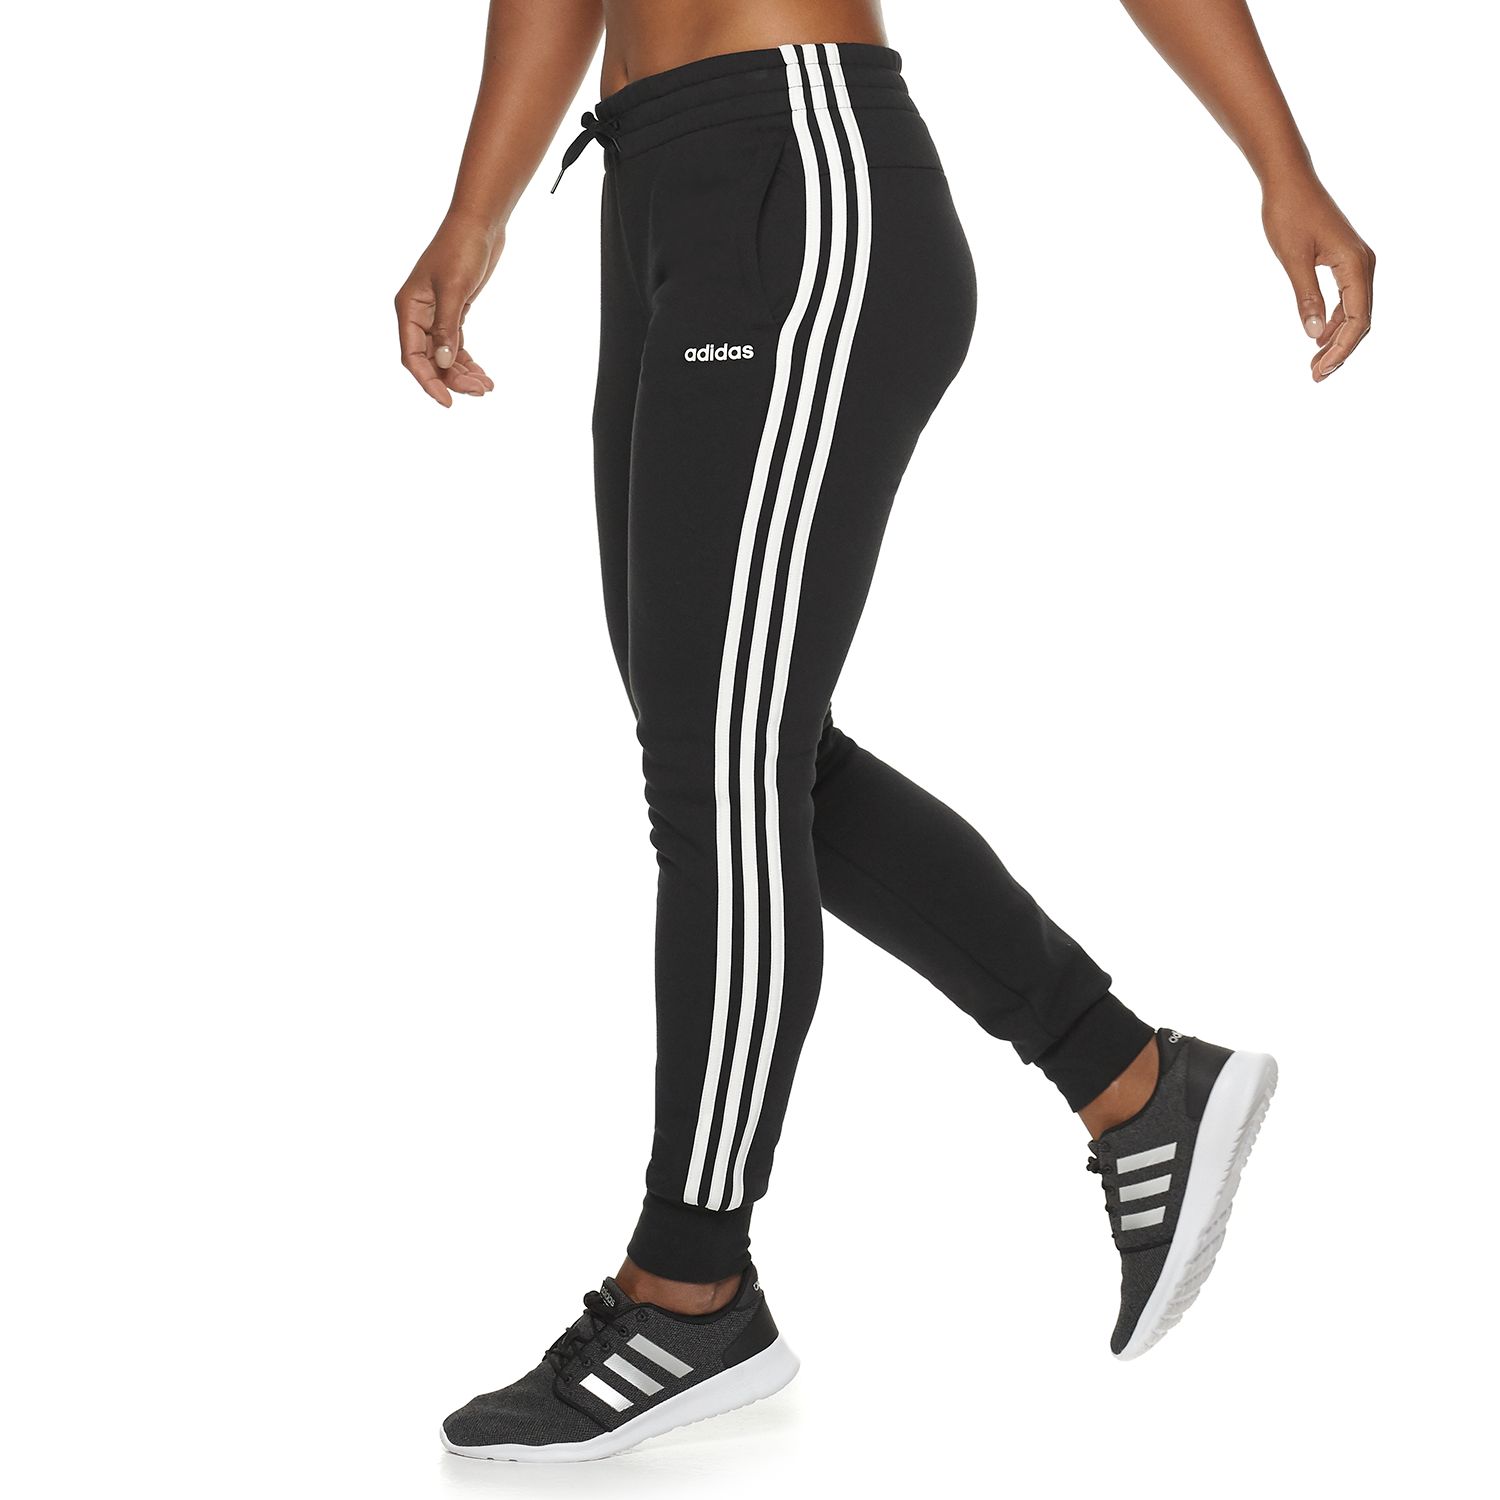 adidas 3 stripes jogger pants